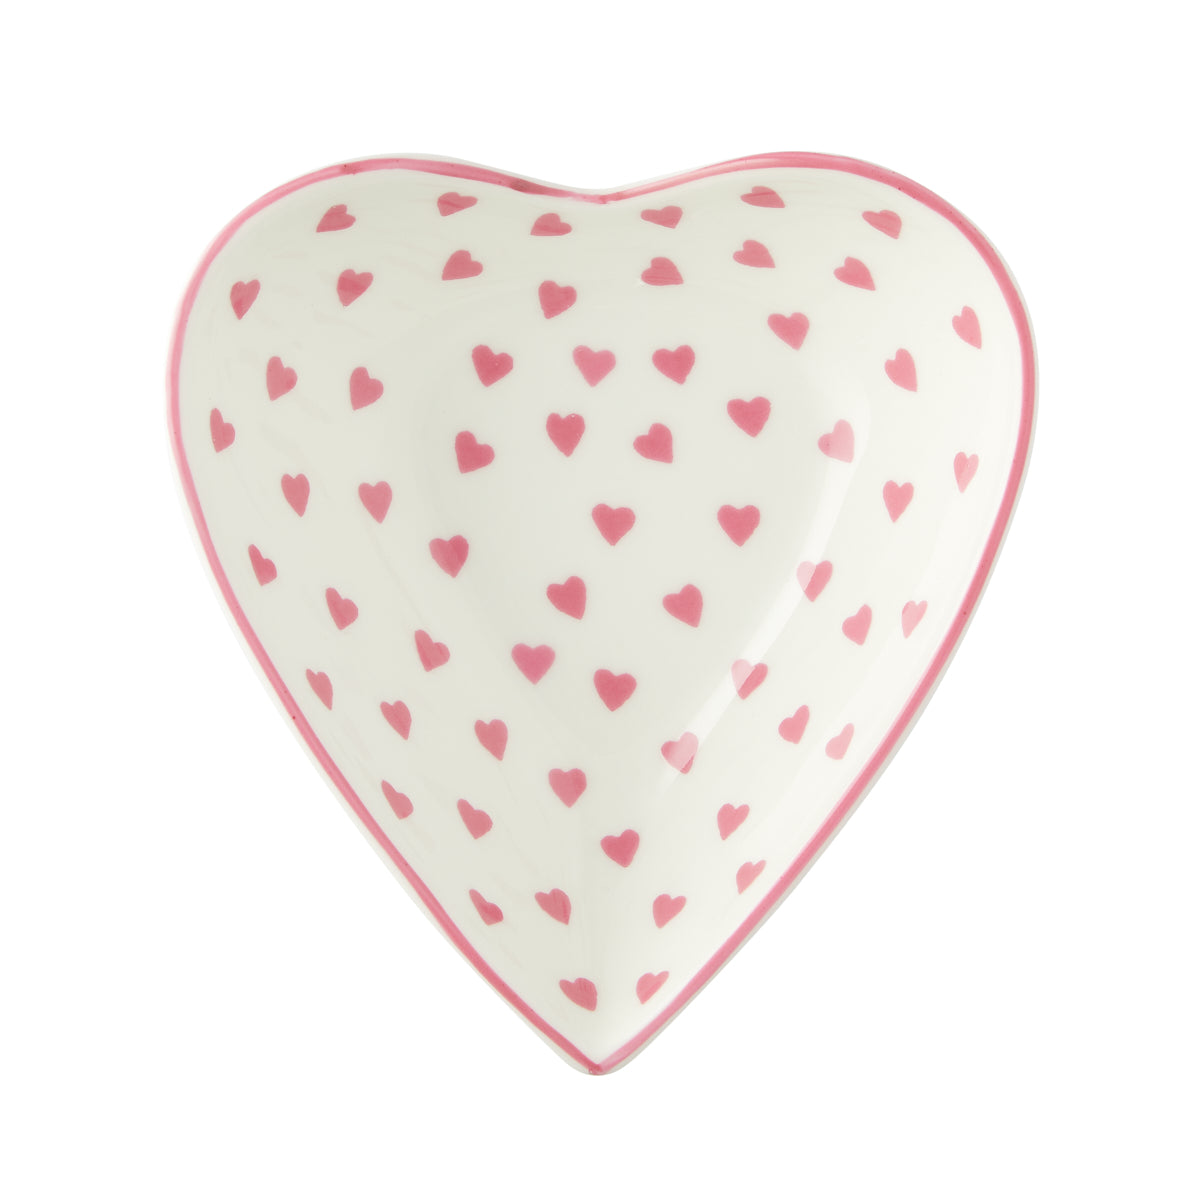 Nina Campbell Medium Heart Dish  - Pink Heart